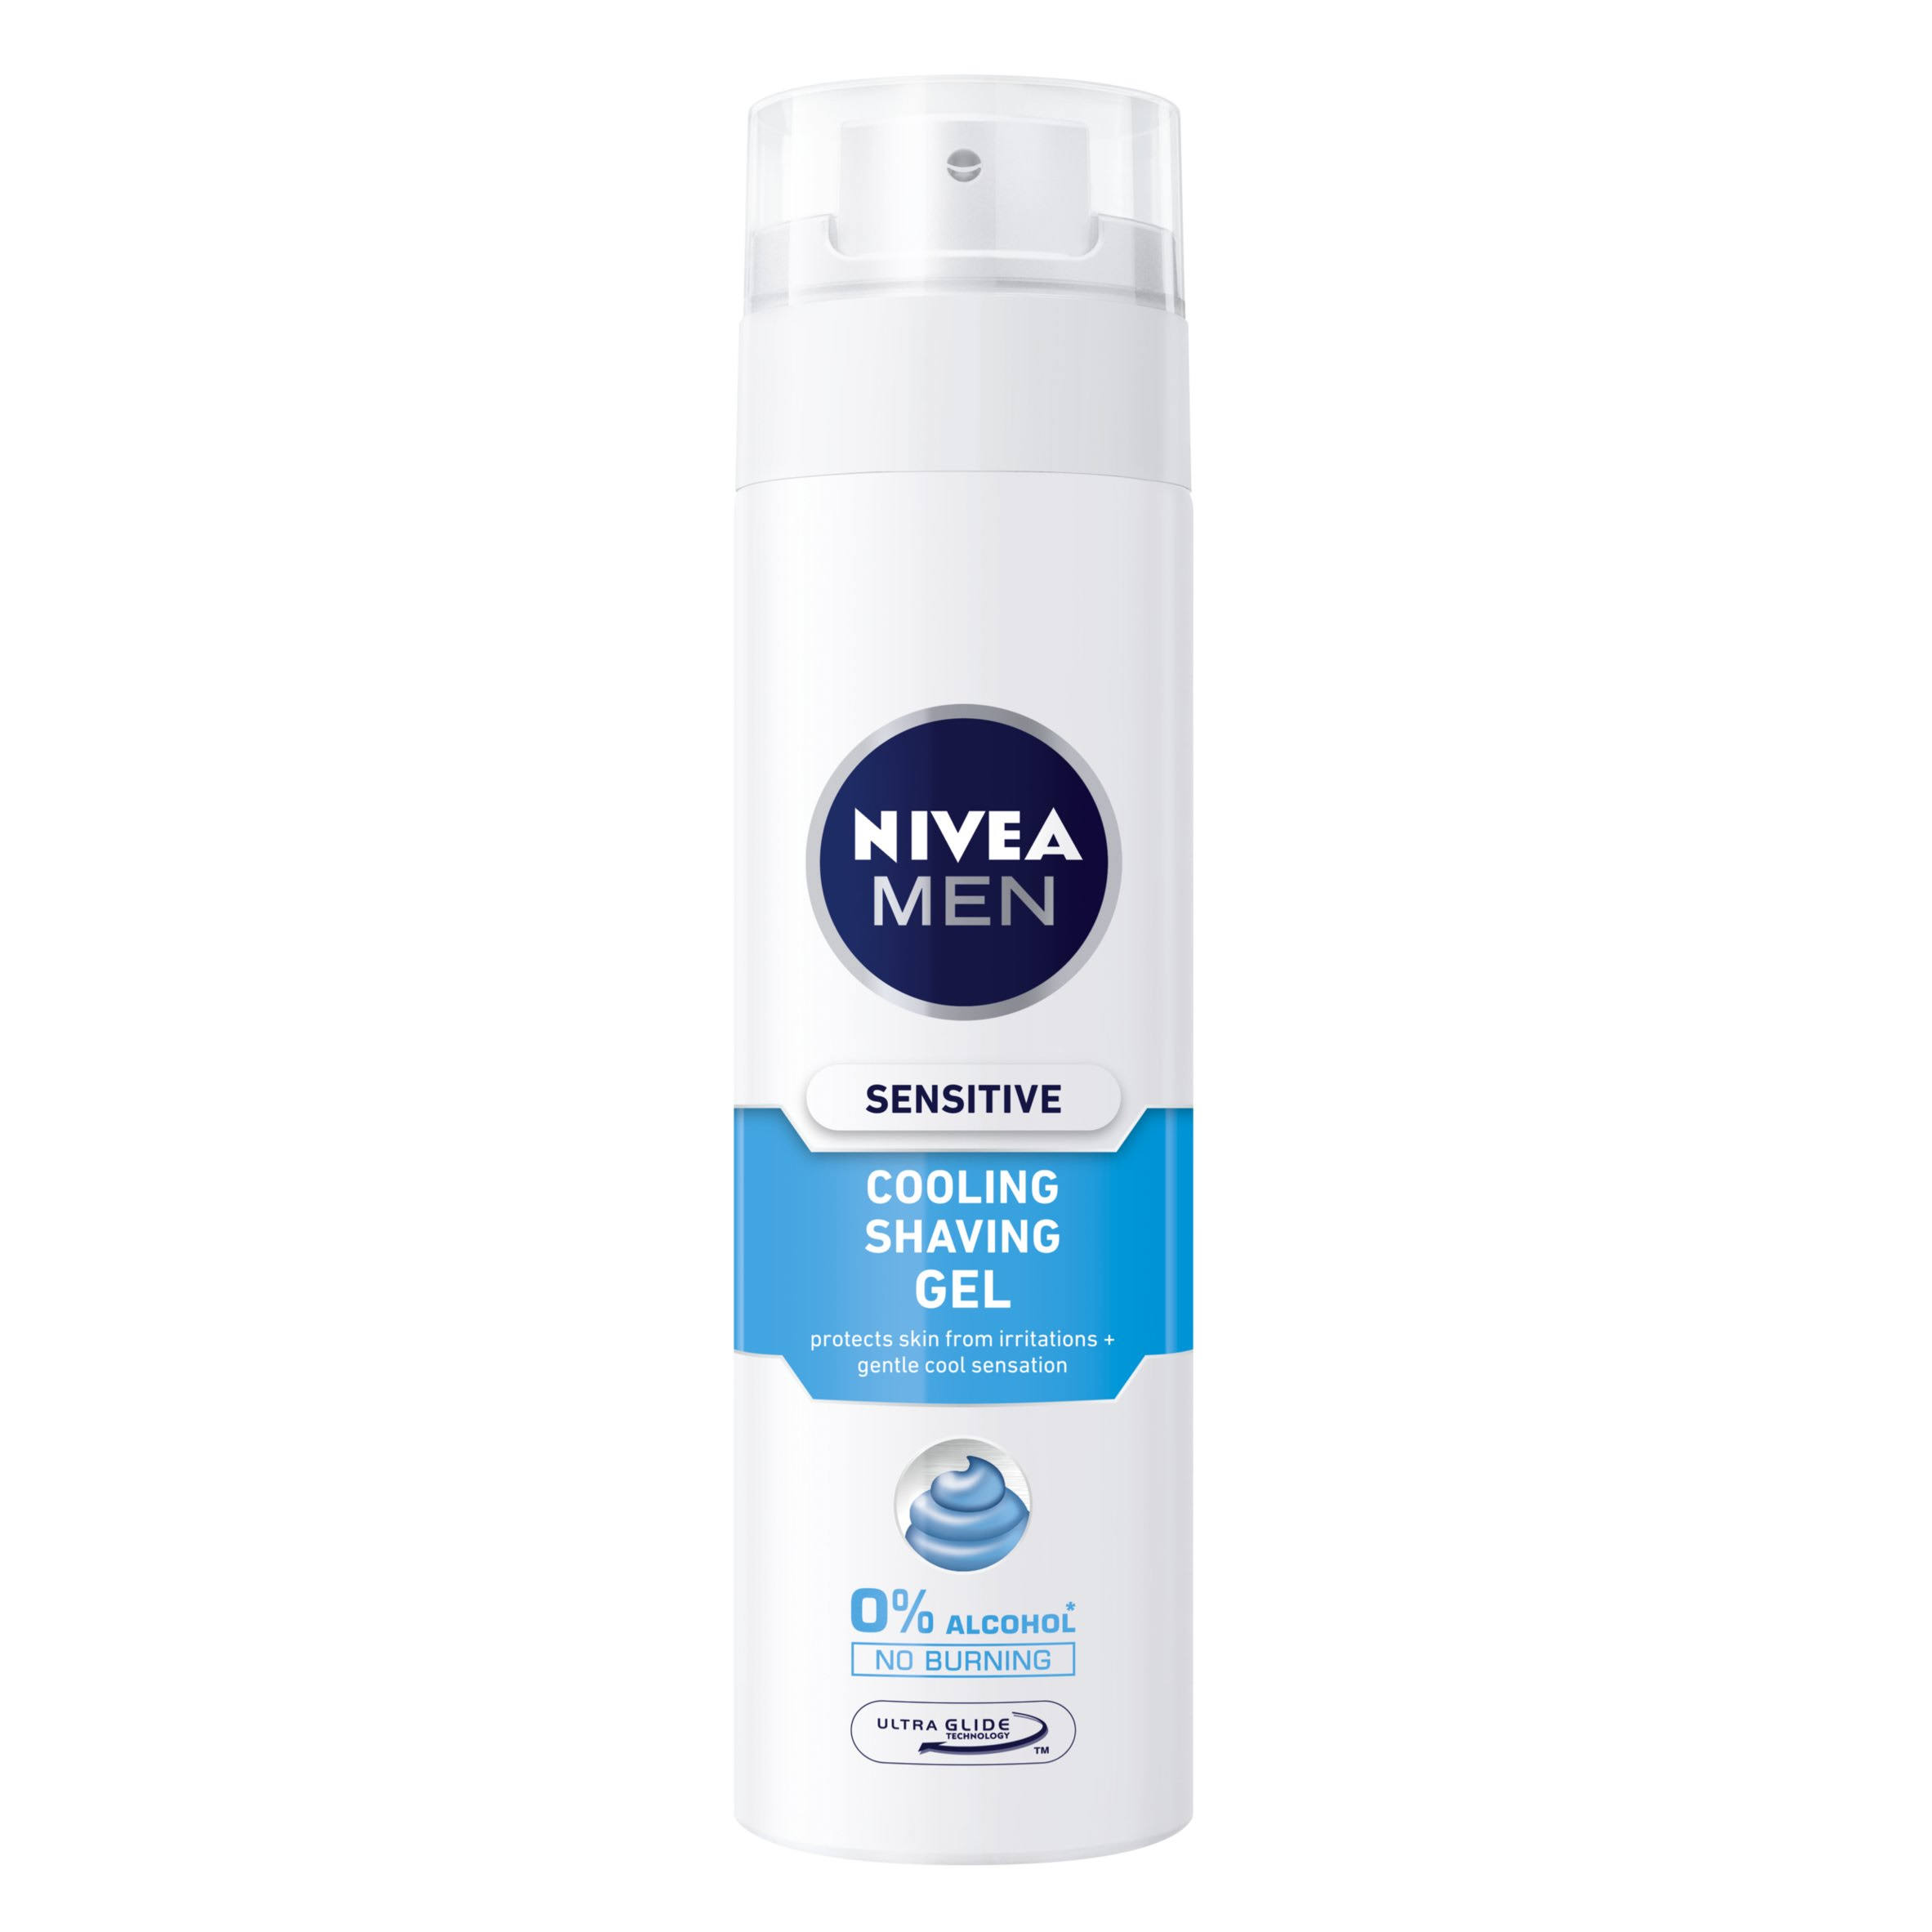 NIVEA Men's Sensitive Cooling Shaving Gel - 200ml